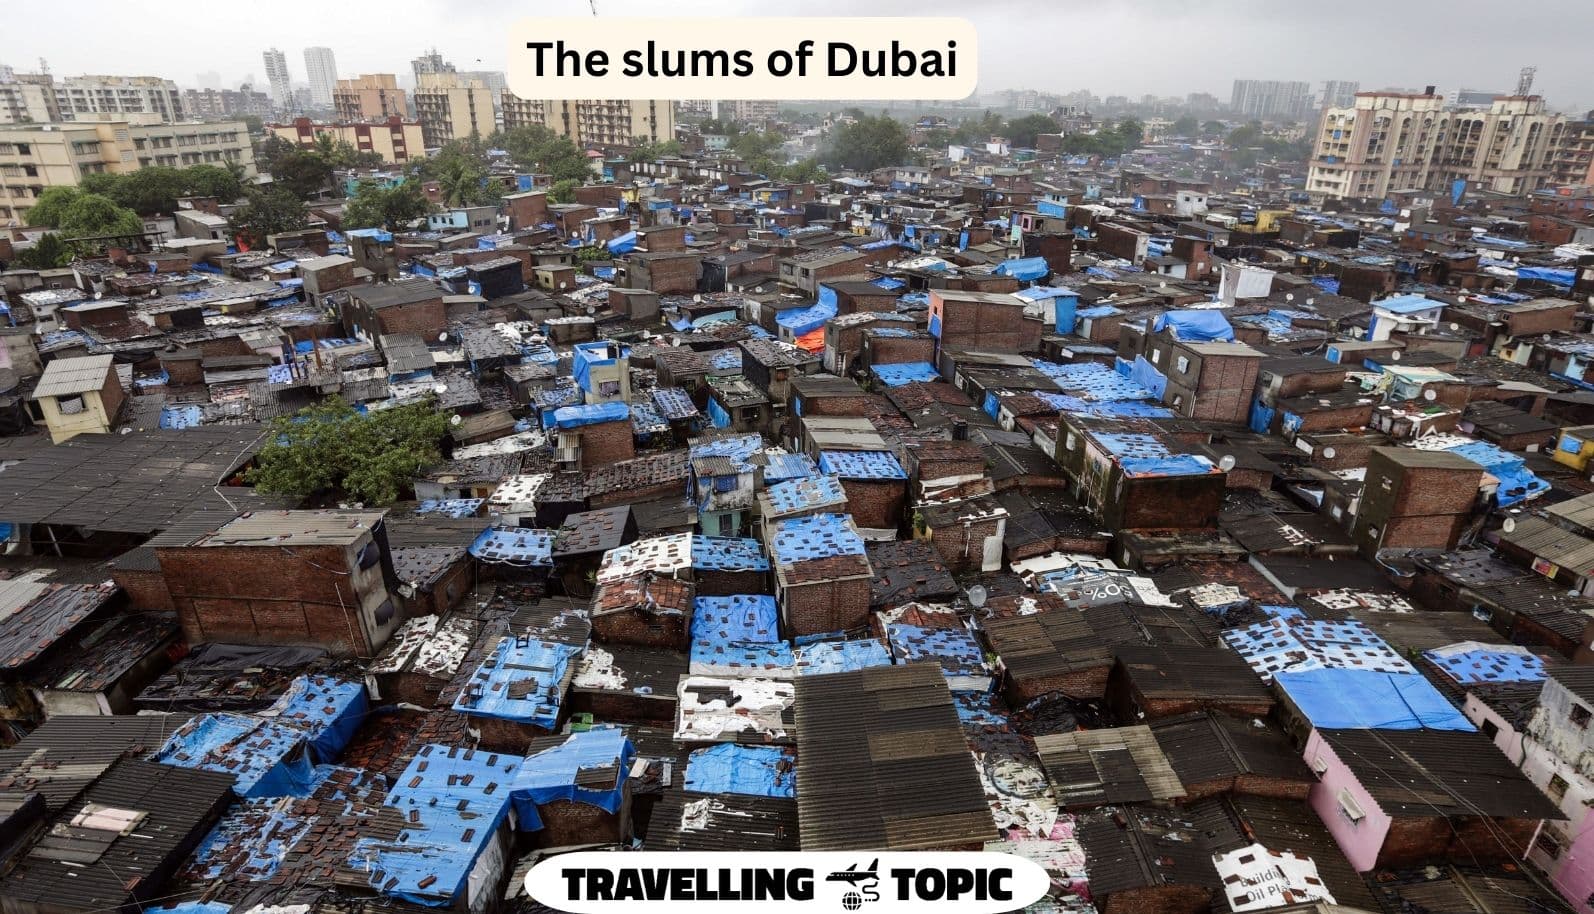 The slums of Dubai